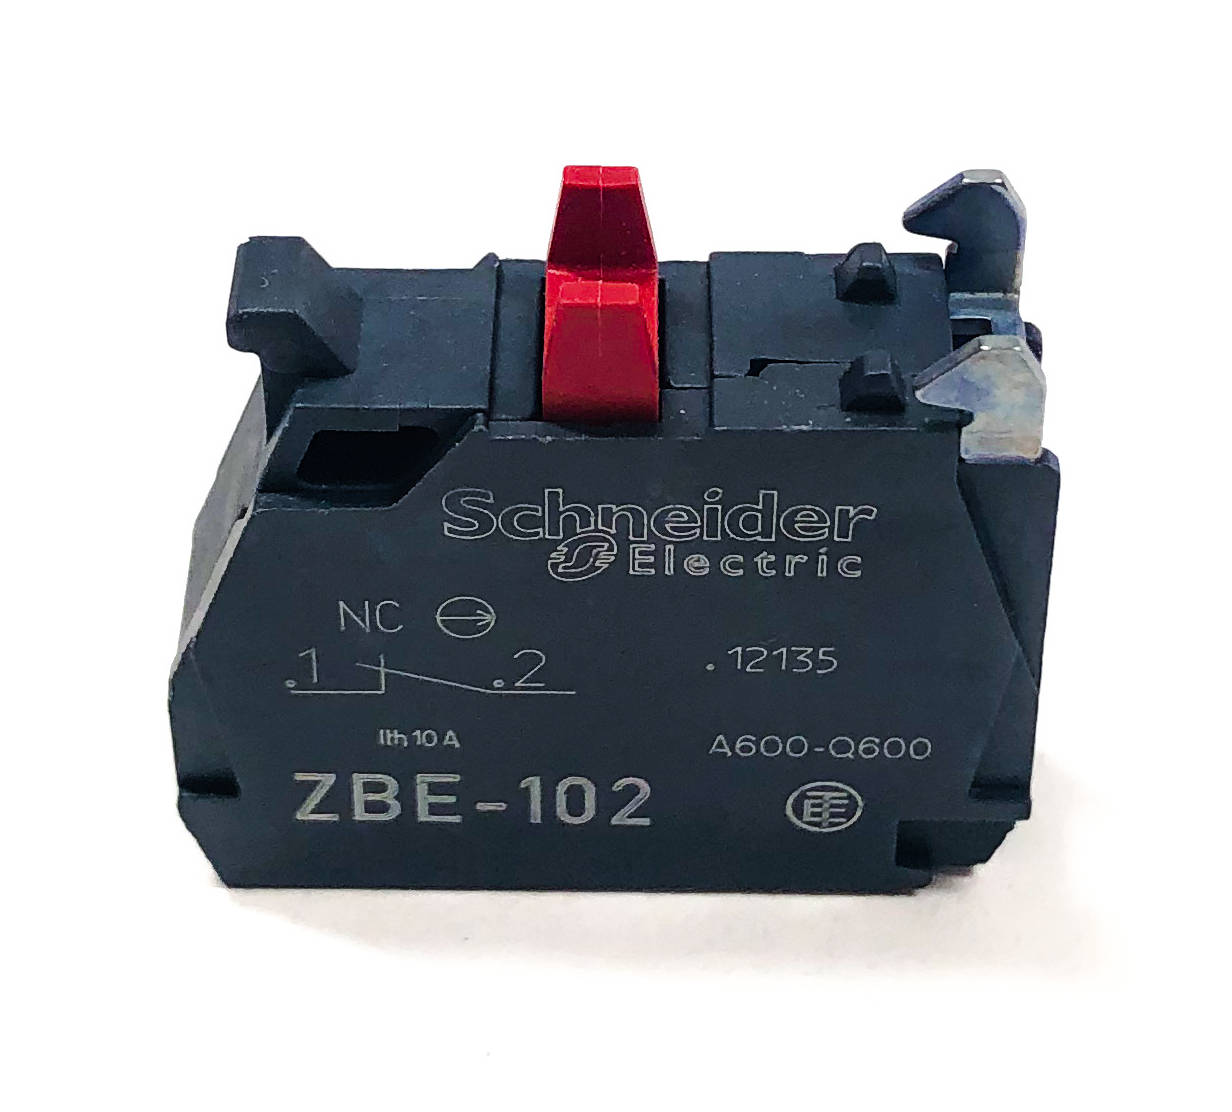 ZBE-102 Schneider Electric Contact Blocks 1